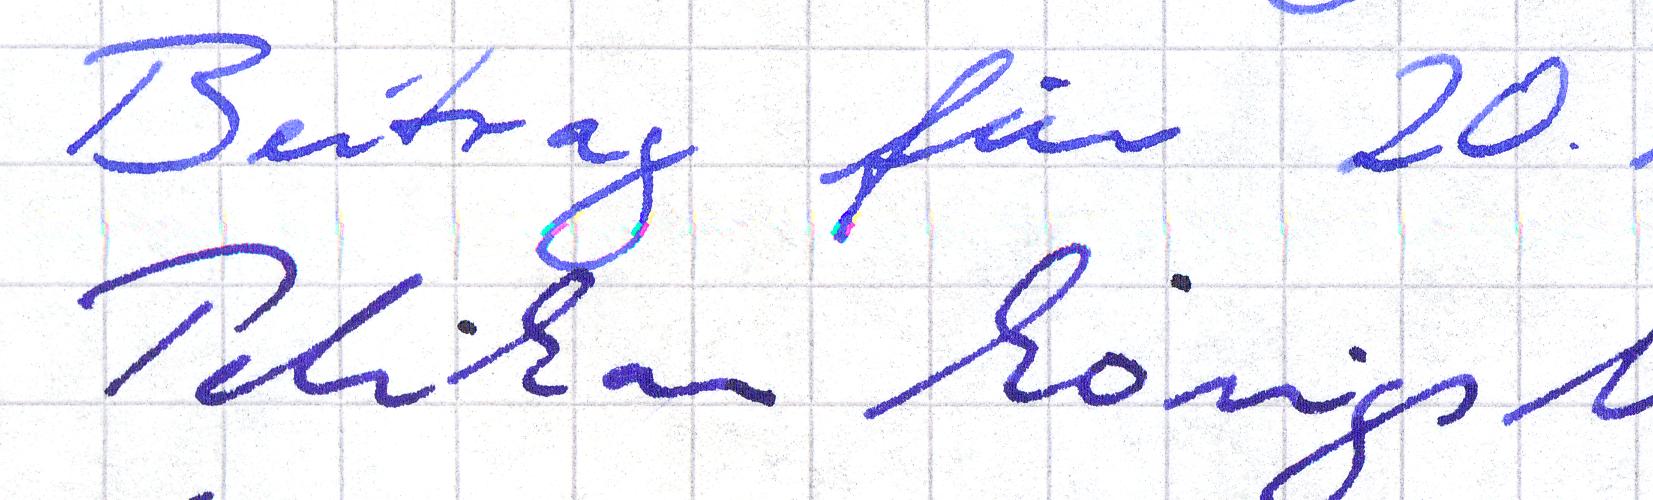 floridablau-königsblau (gedunkelt).jpg